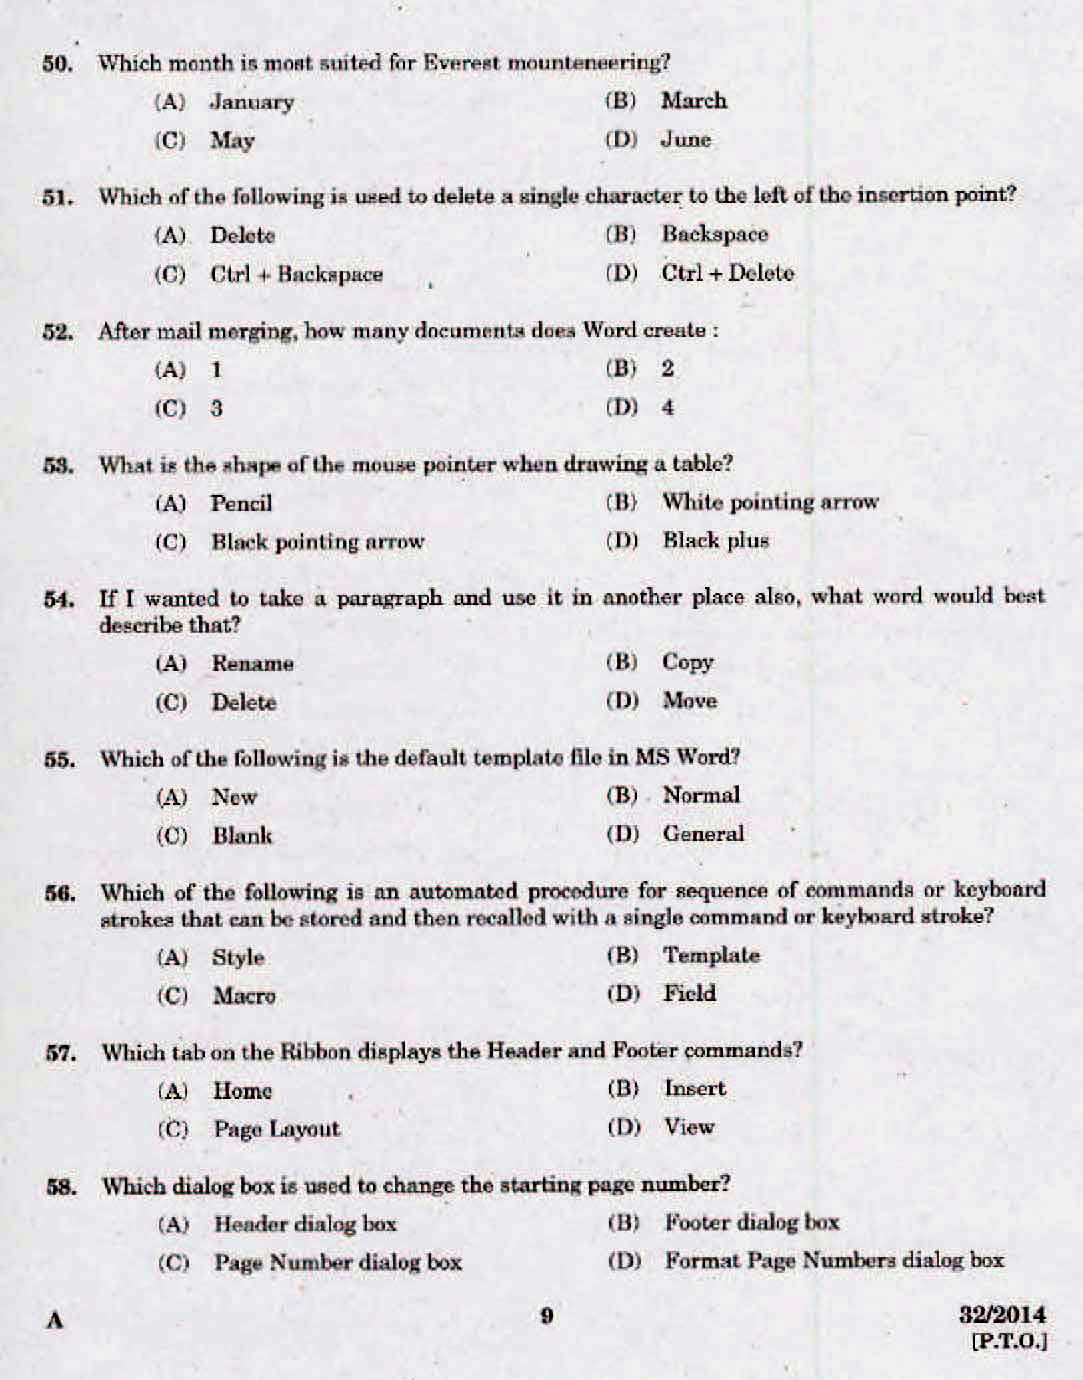 Kerala LD Typist Exam 2014 Question Paper Code 322014 7